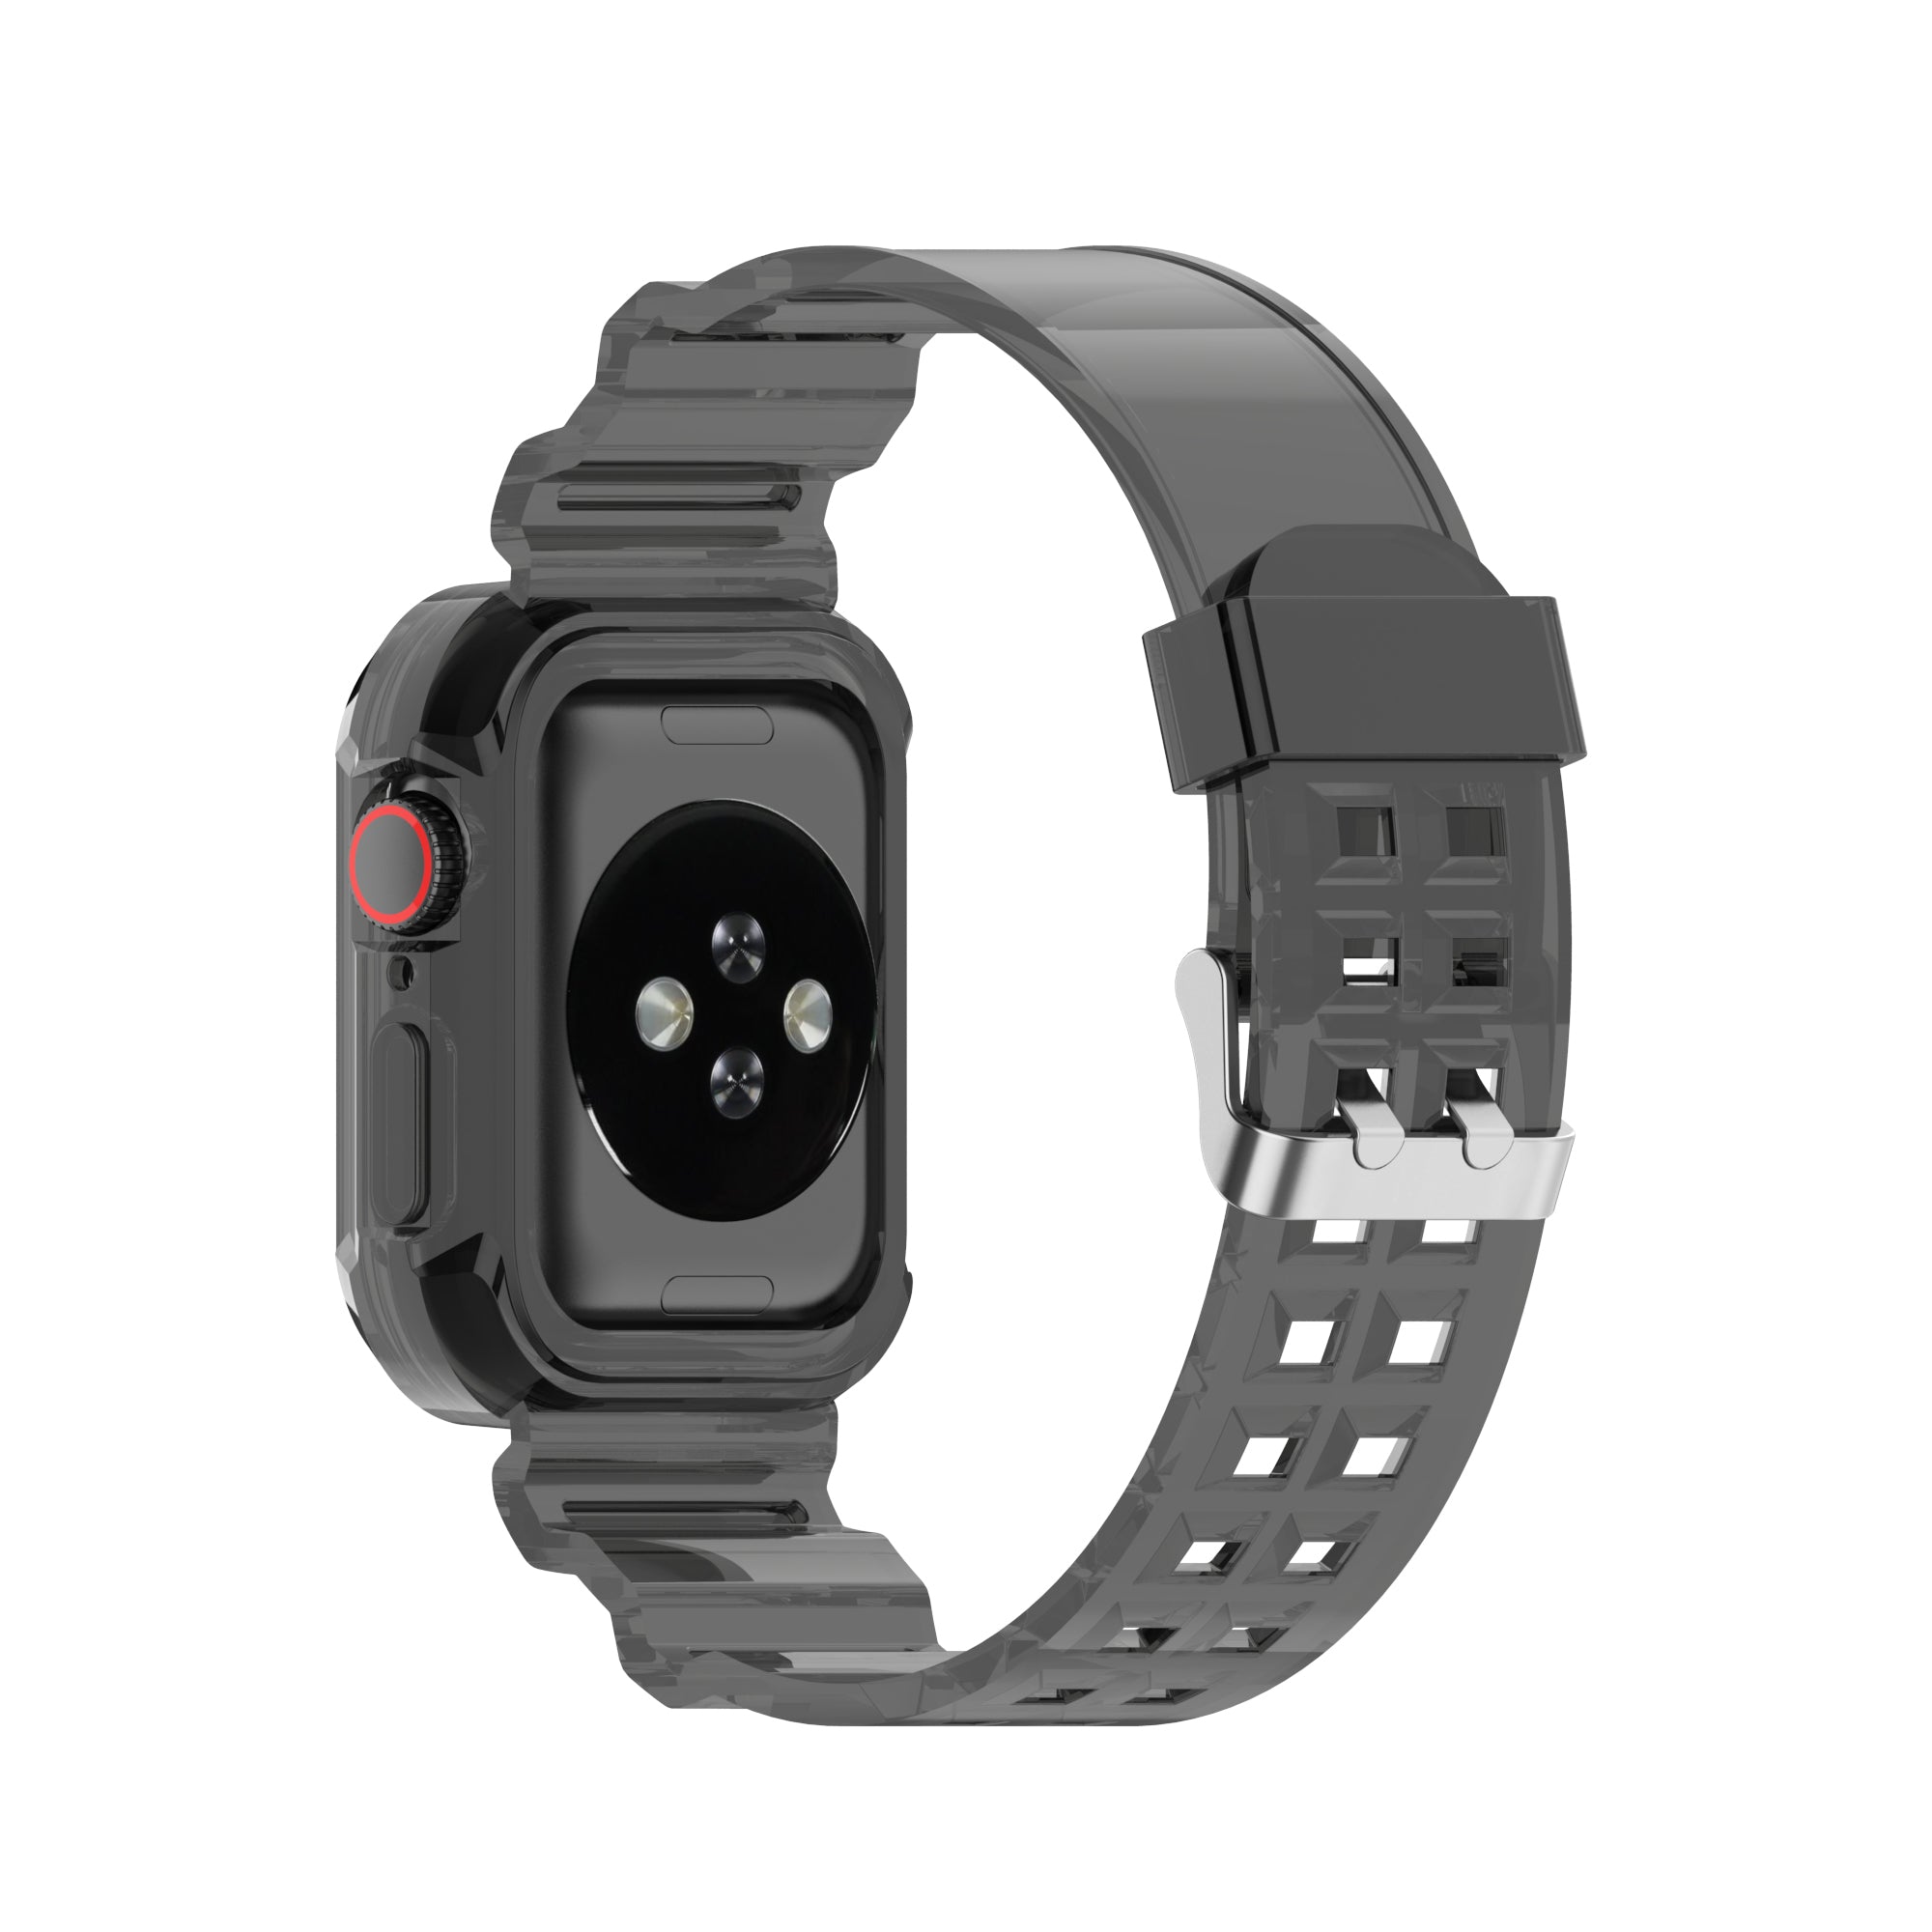 [Apple Watch] Transparent Case & Strap